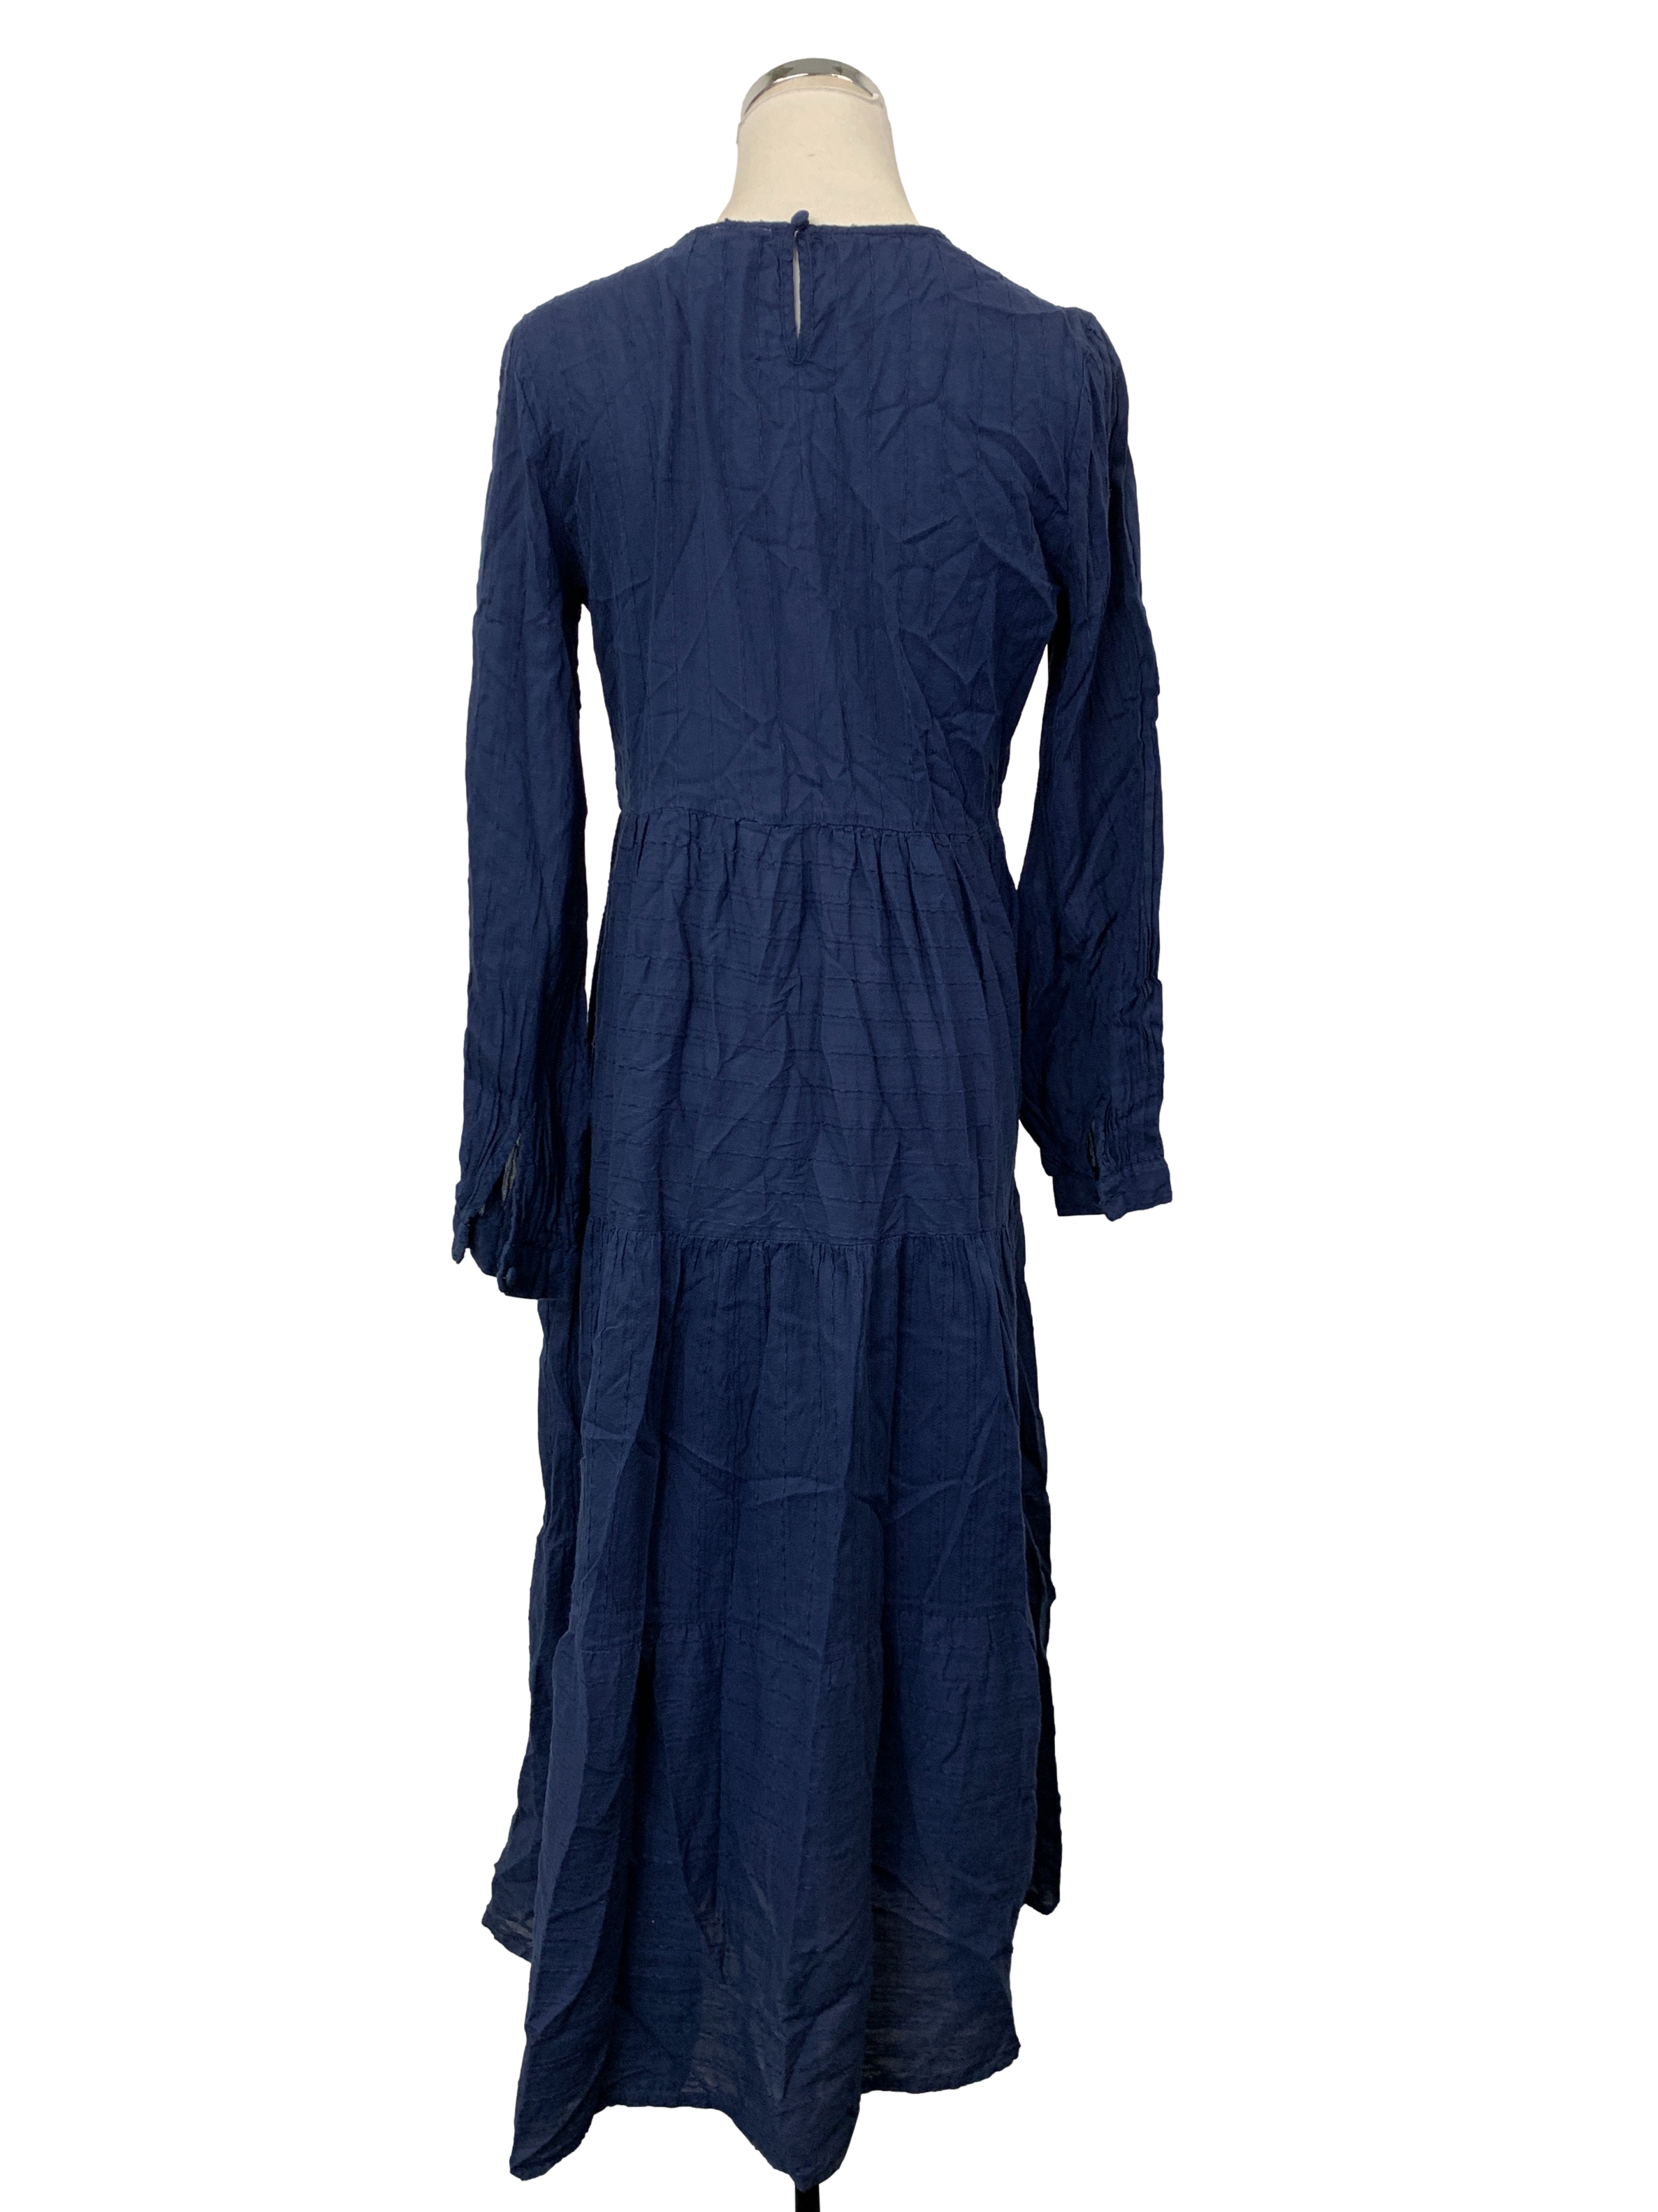 Navy Blue Textured Long Sleeves Empire Dress